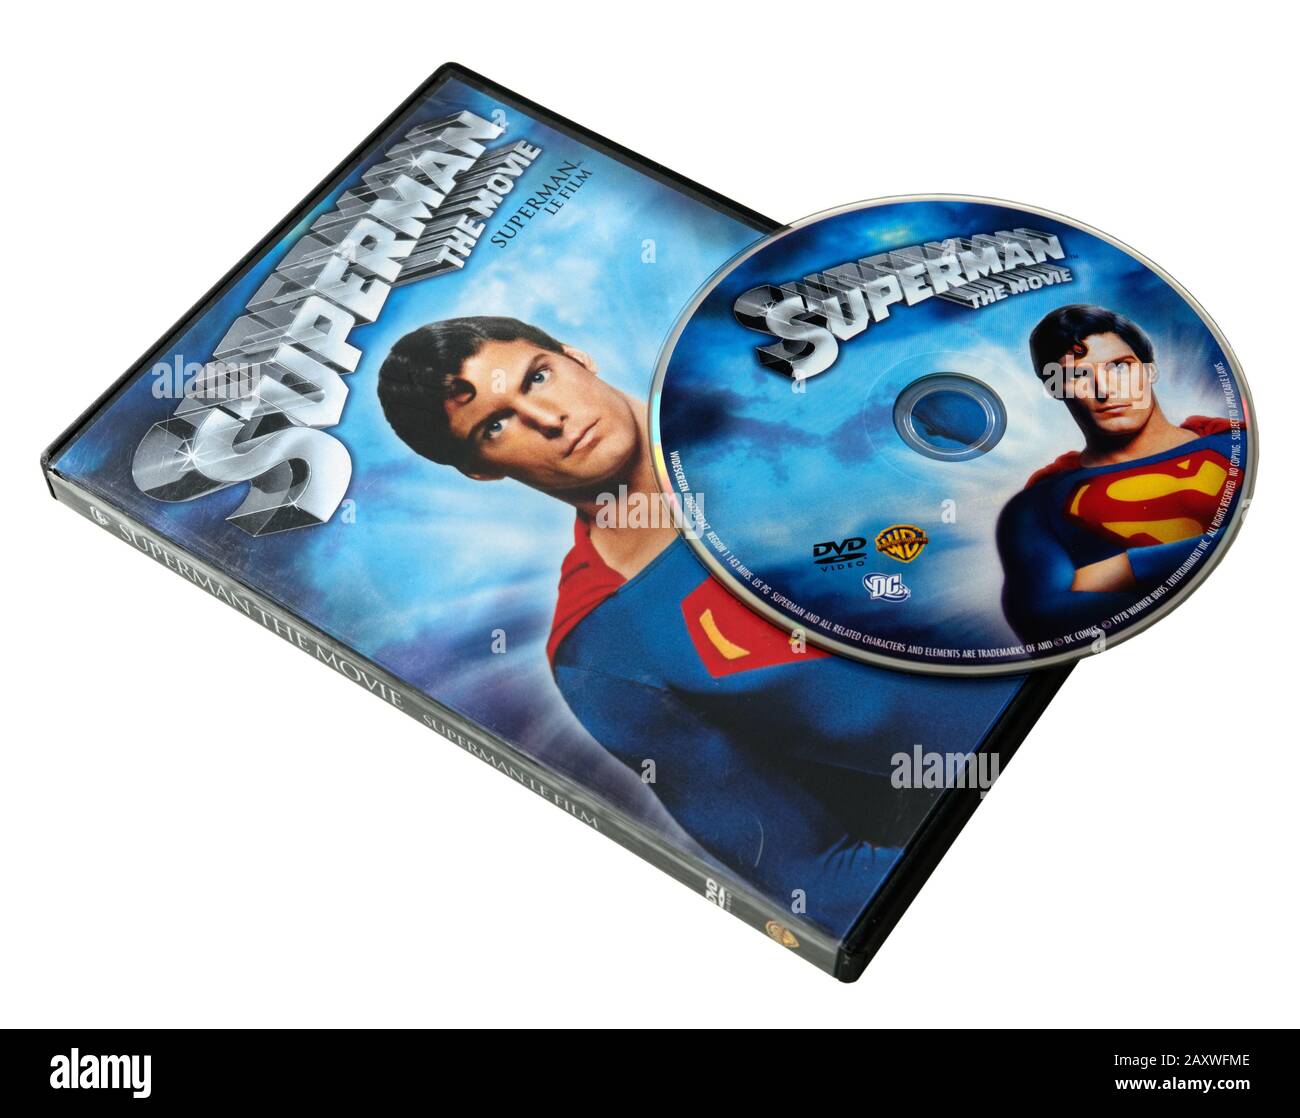 Superman The Movie on DVD Stock Photo - Alamy